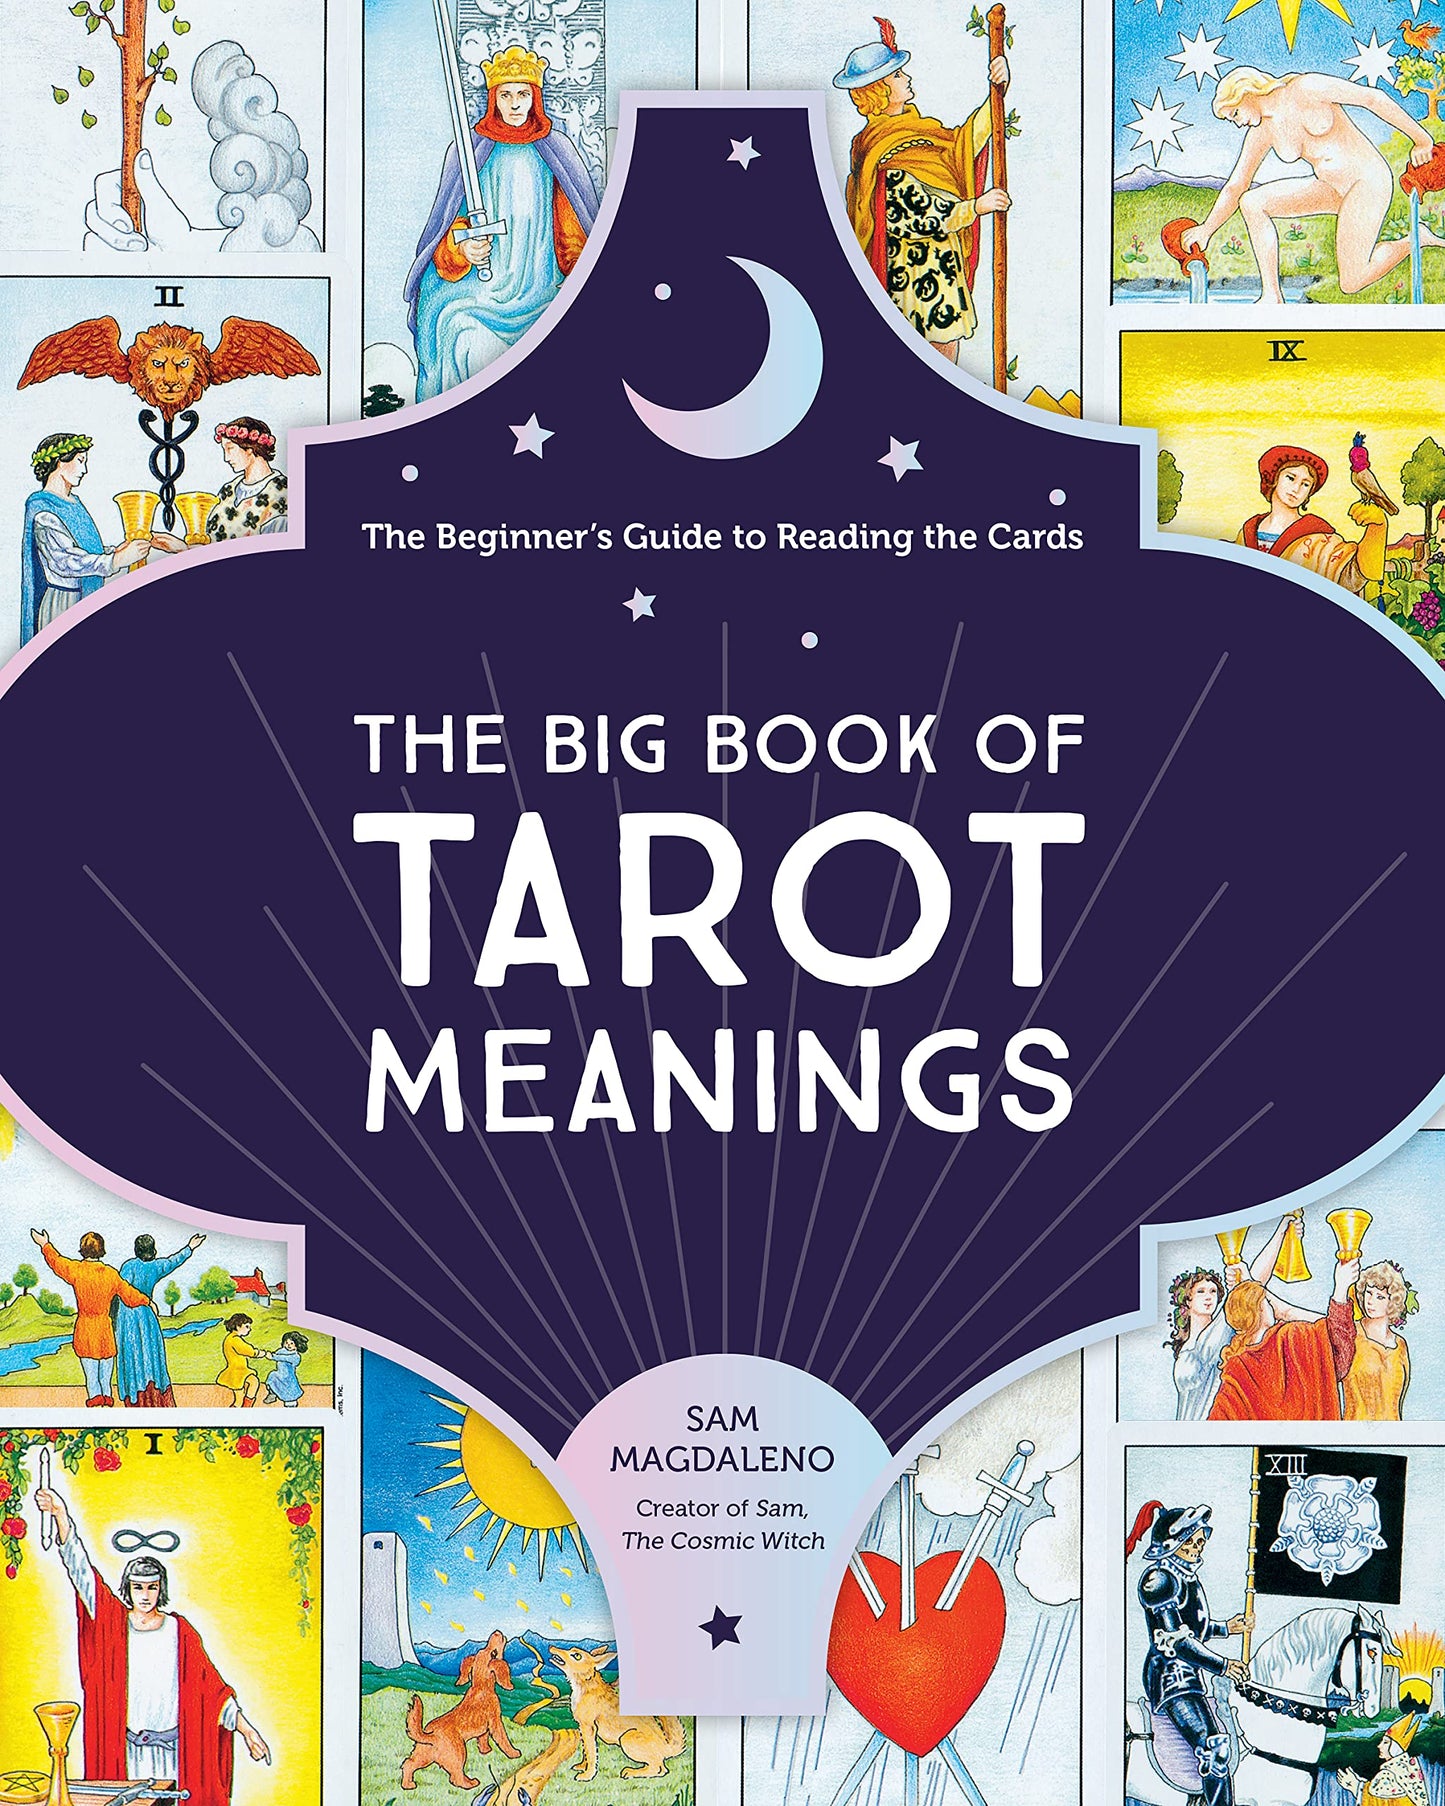 Big Book of Tarot Meanings by Swan Treasure